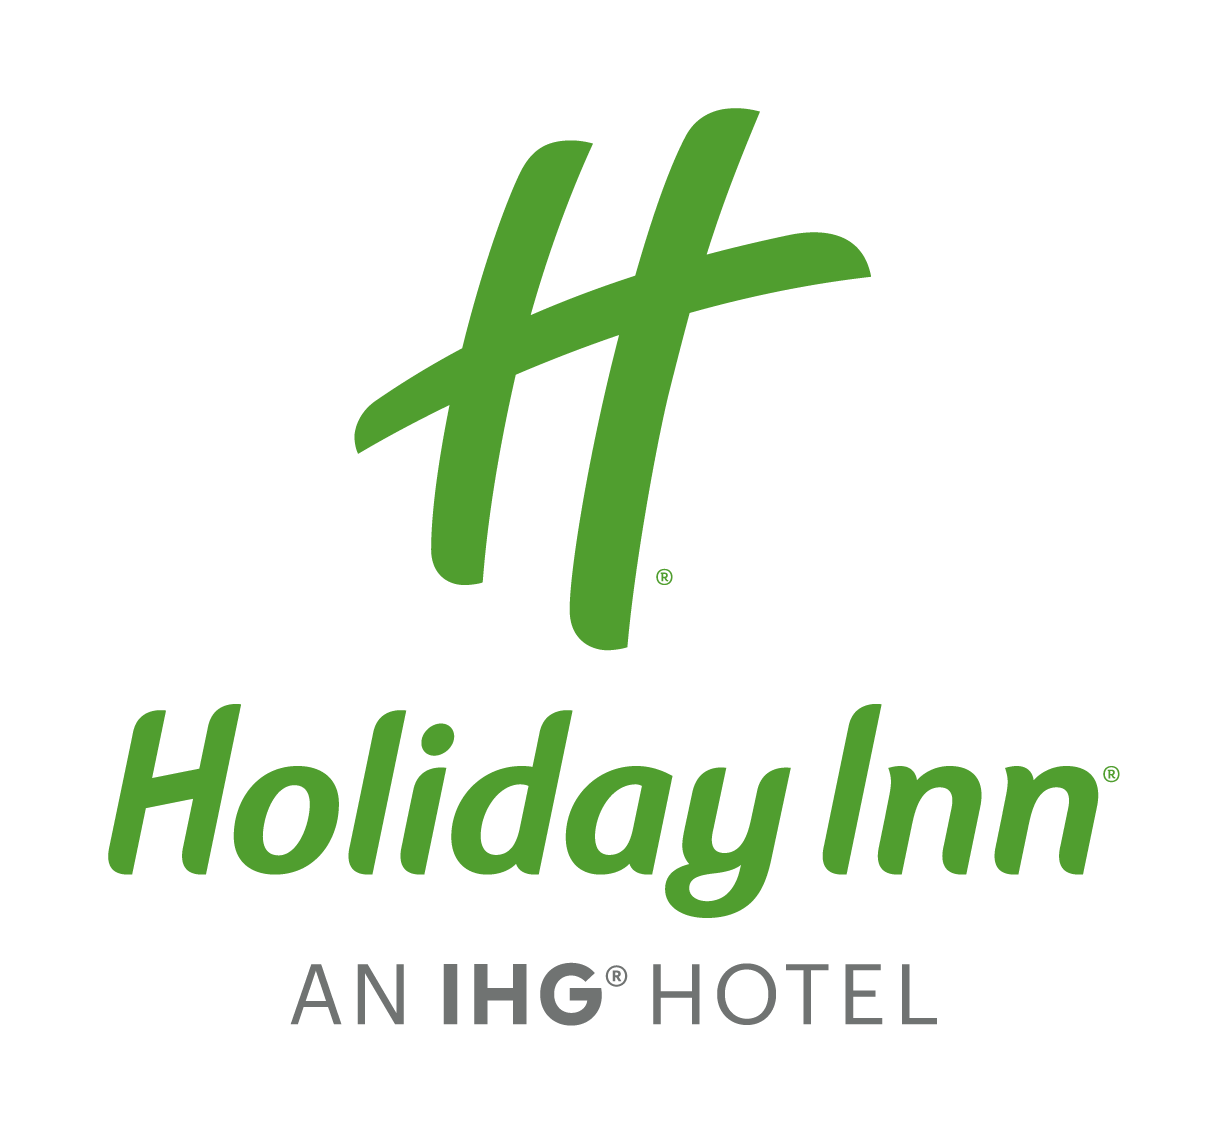 Logo for Holiday Inn Leicester